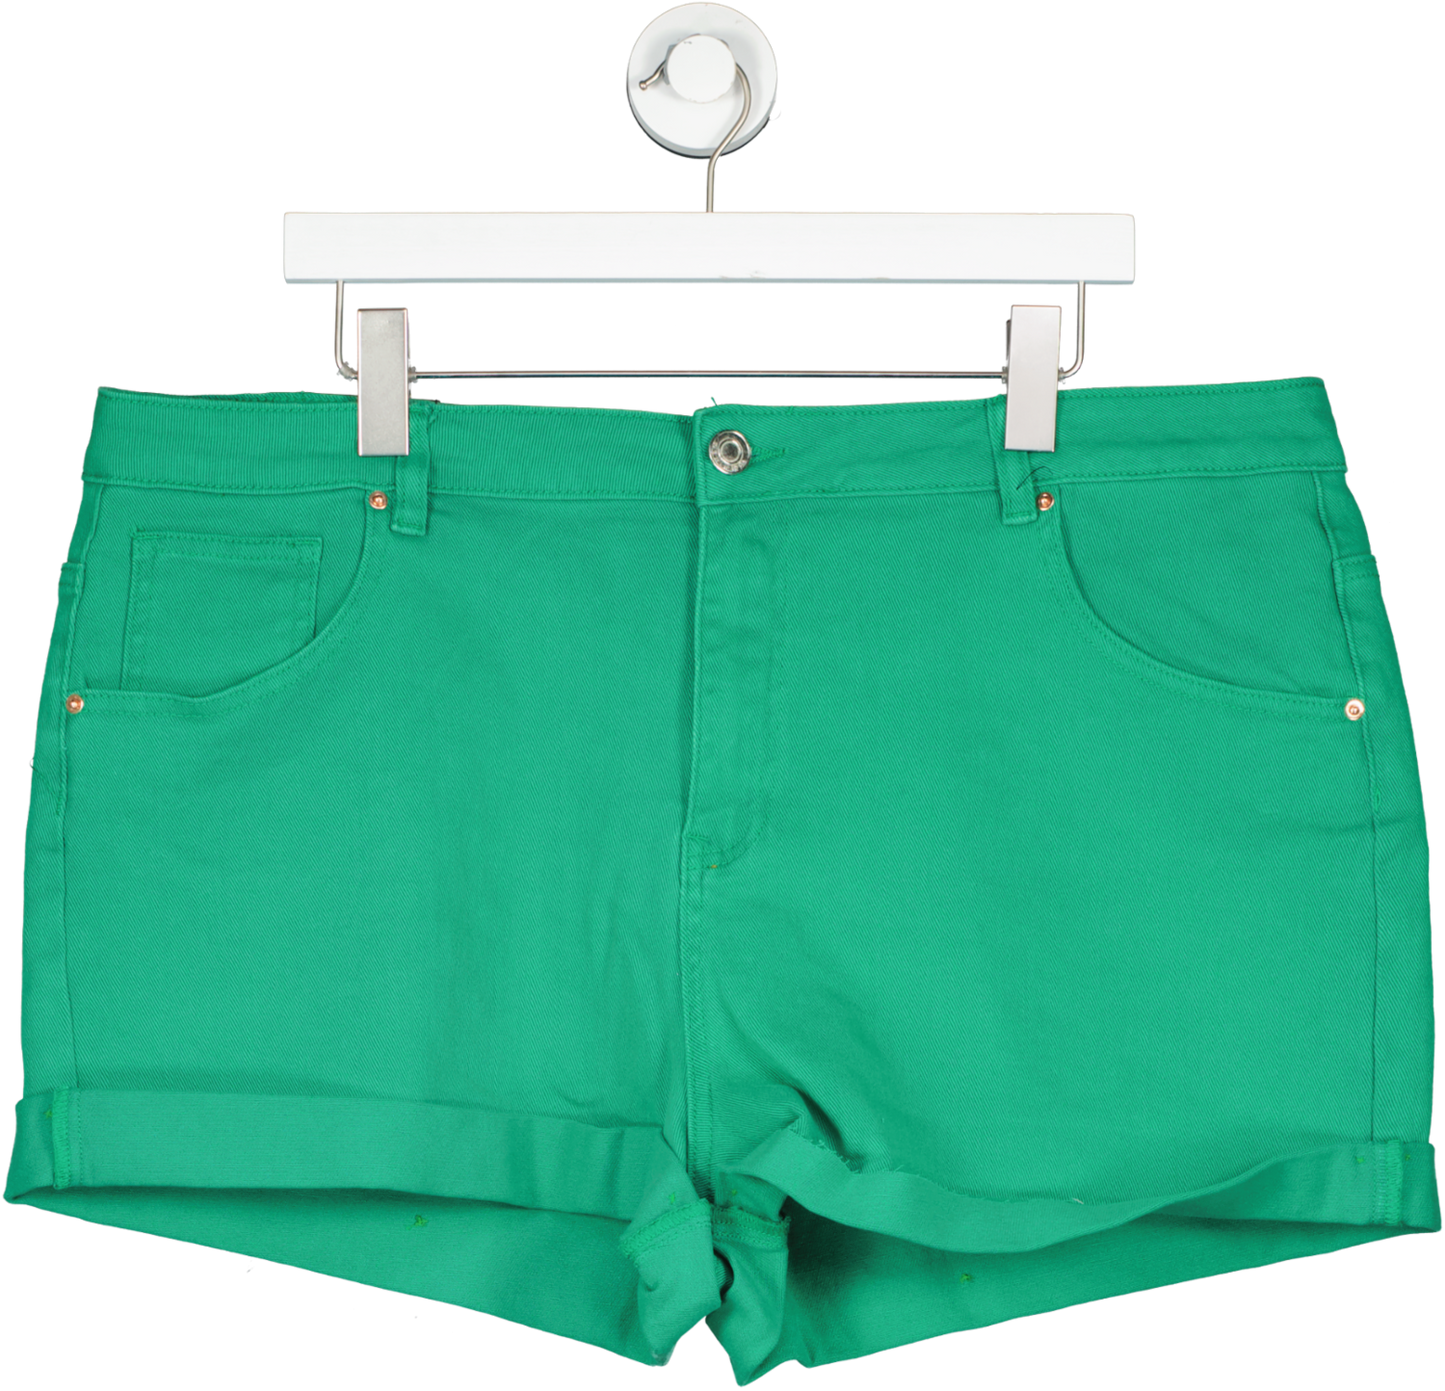 SimplyBe Green Denim Jean Shorts UK 22